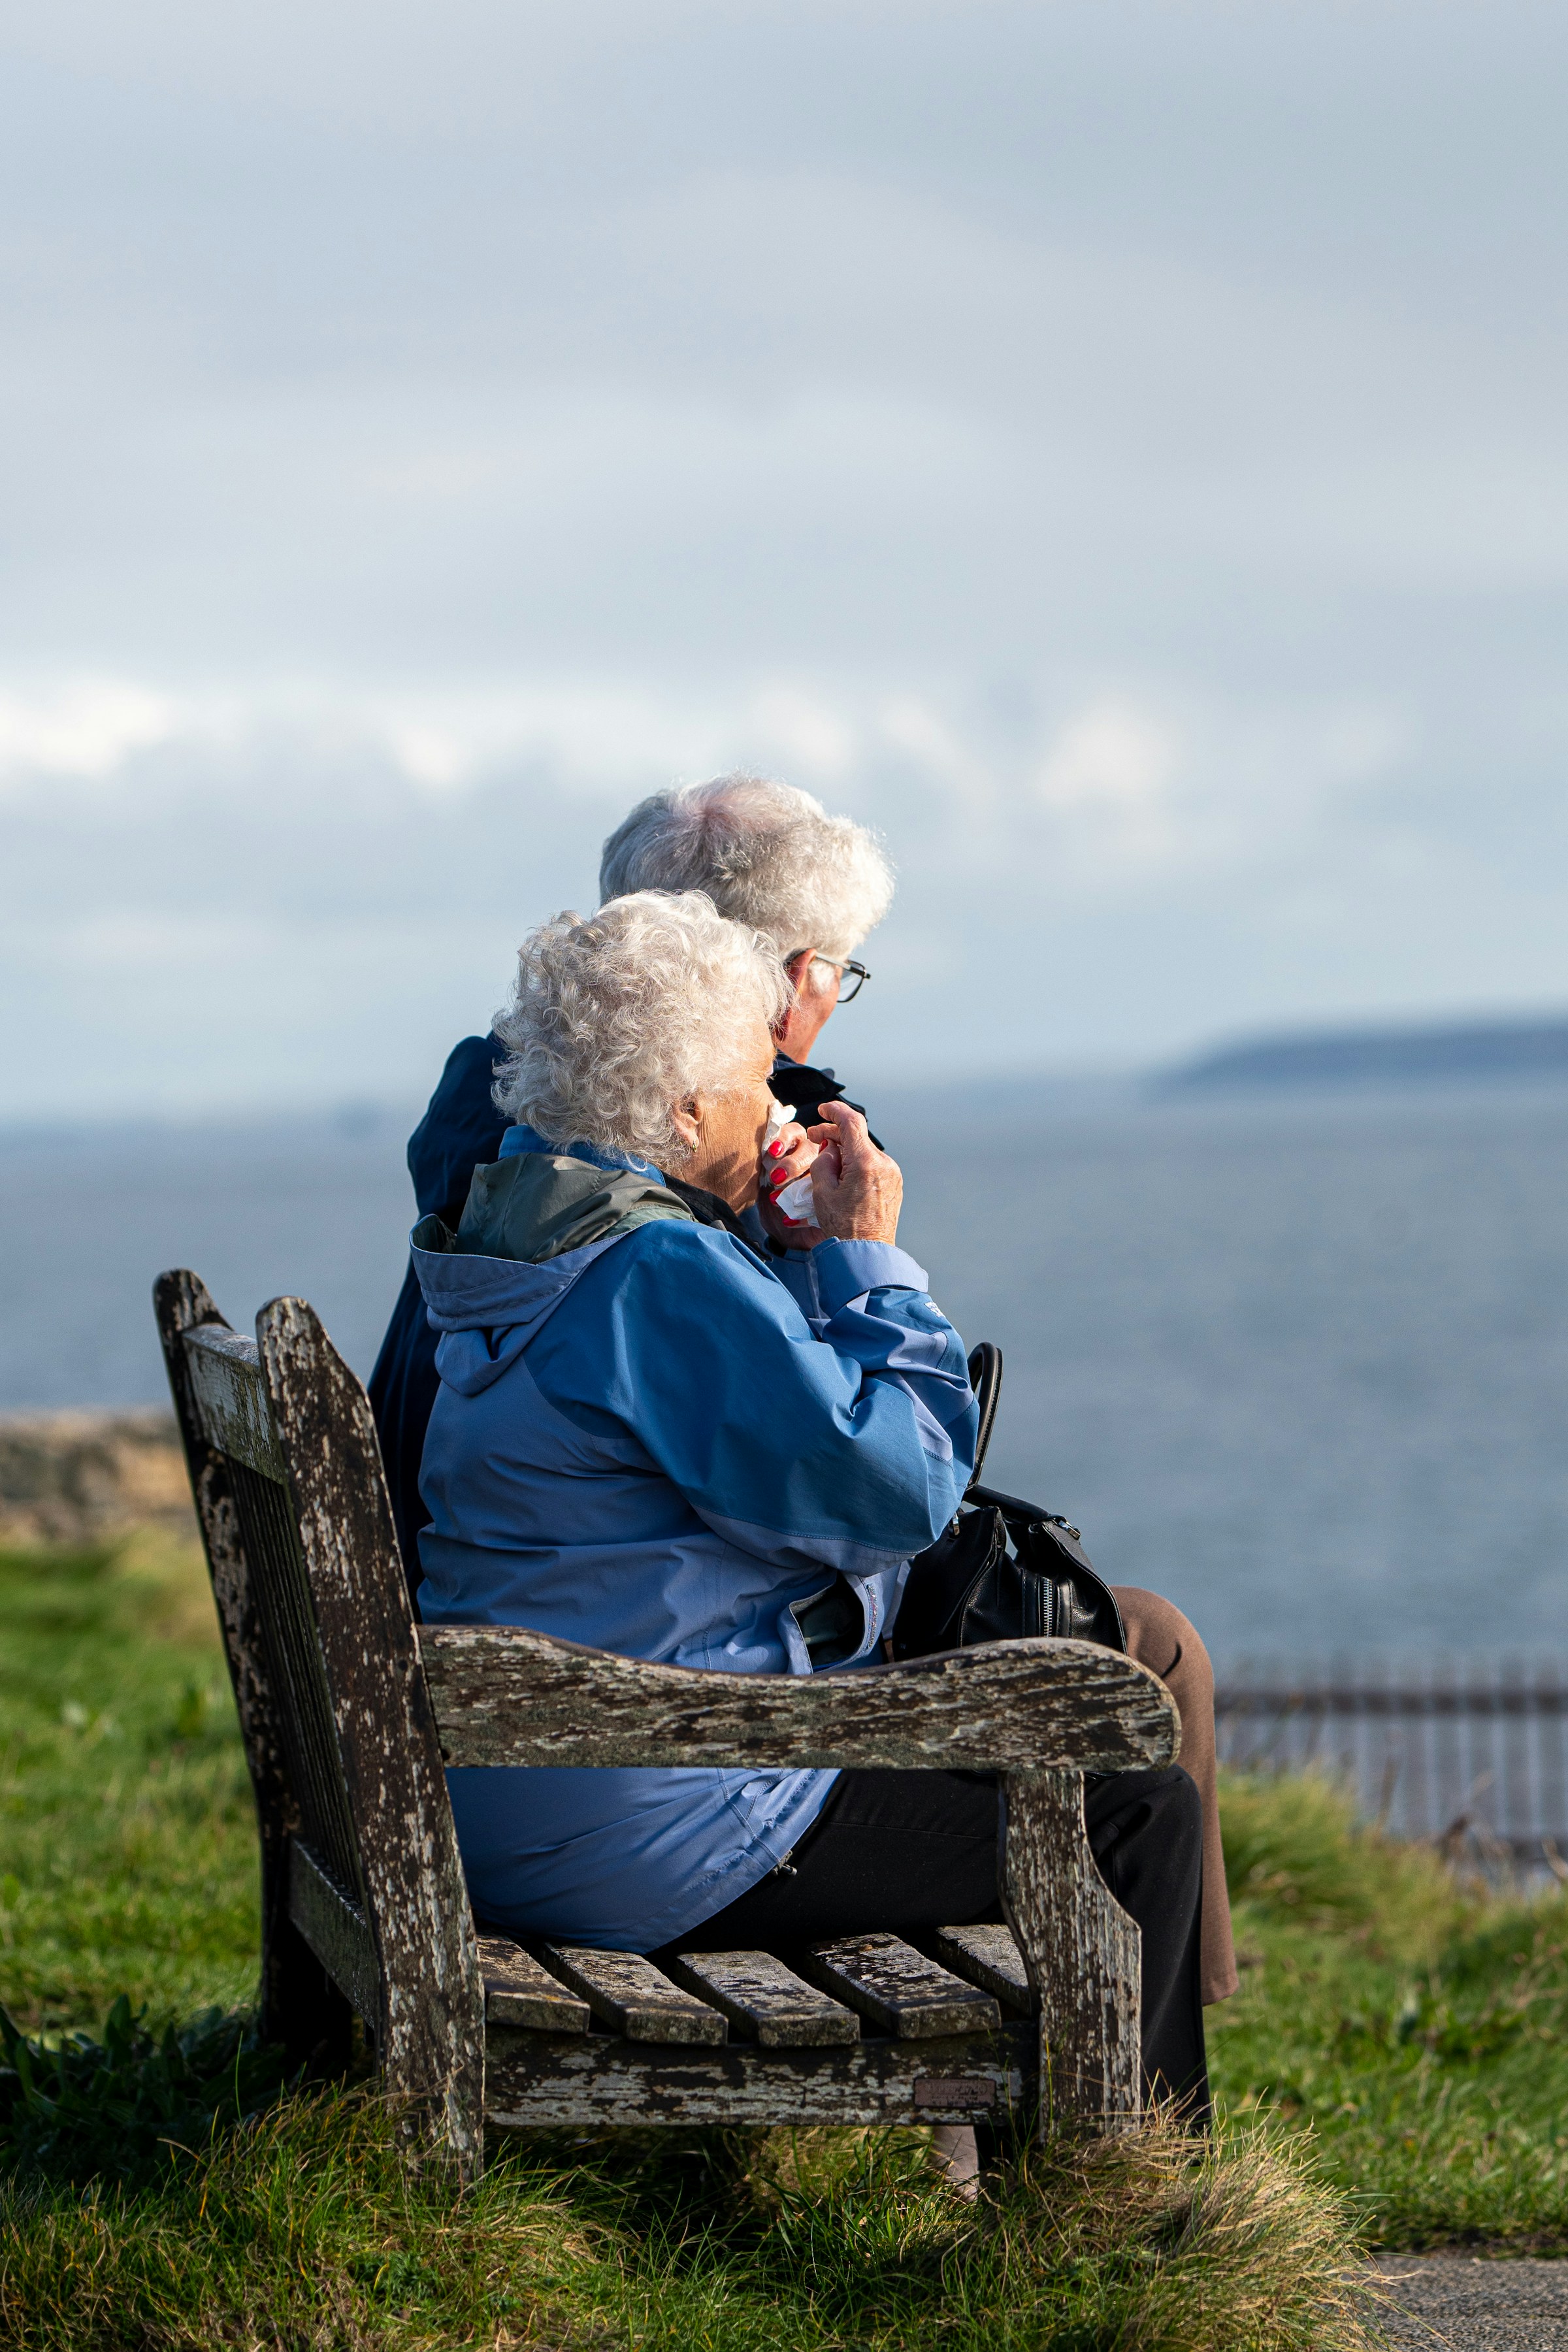 An elderly couple sitting on a bench | Source: Unsplash